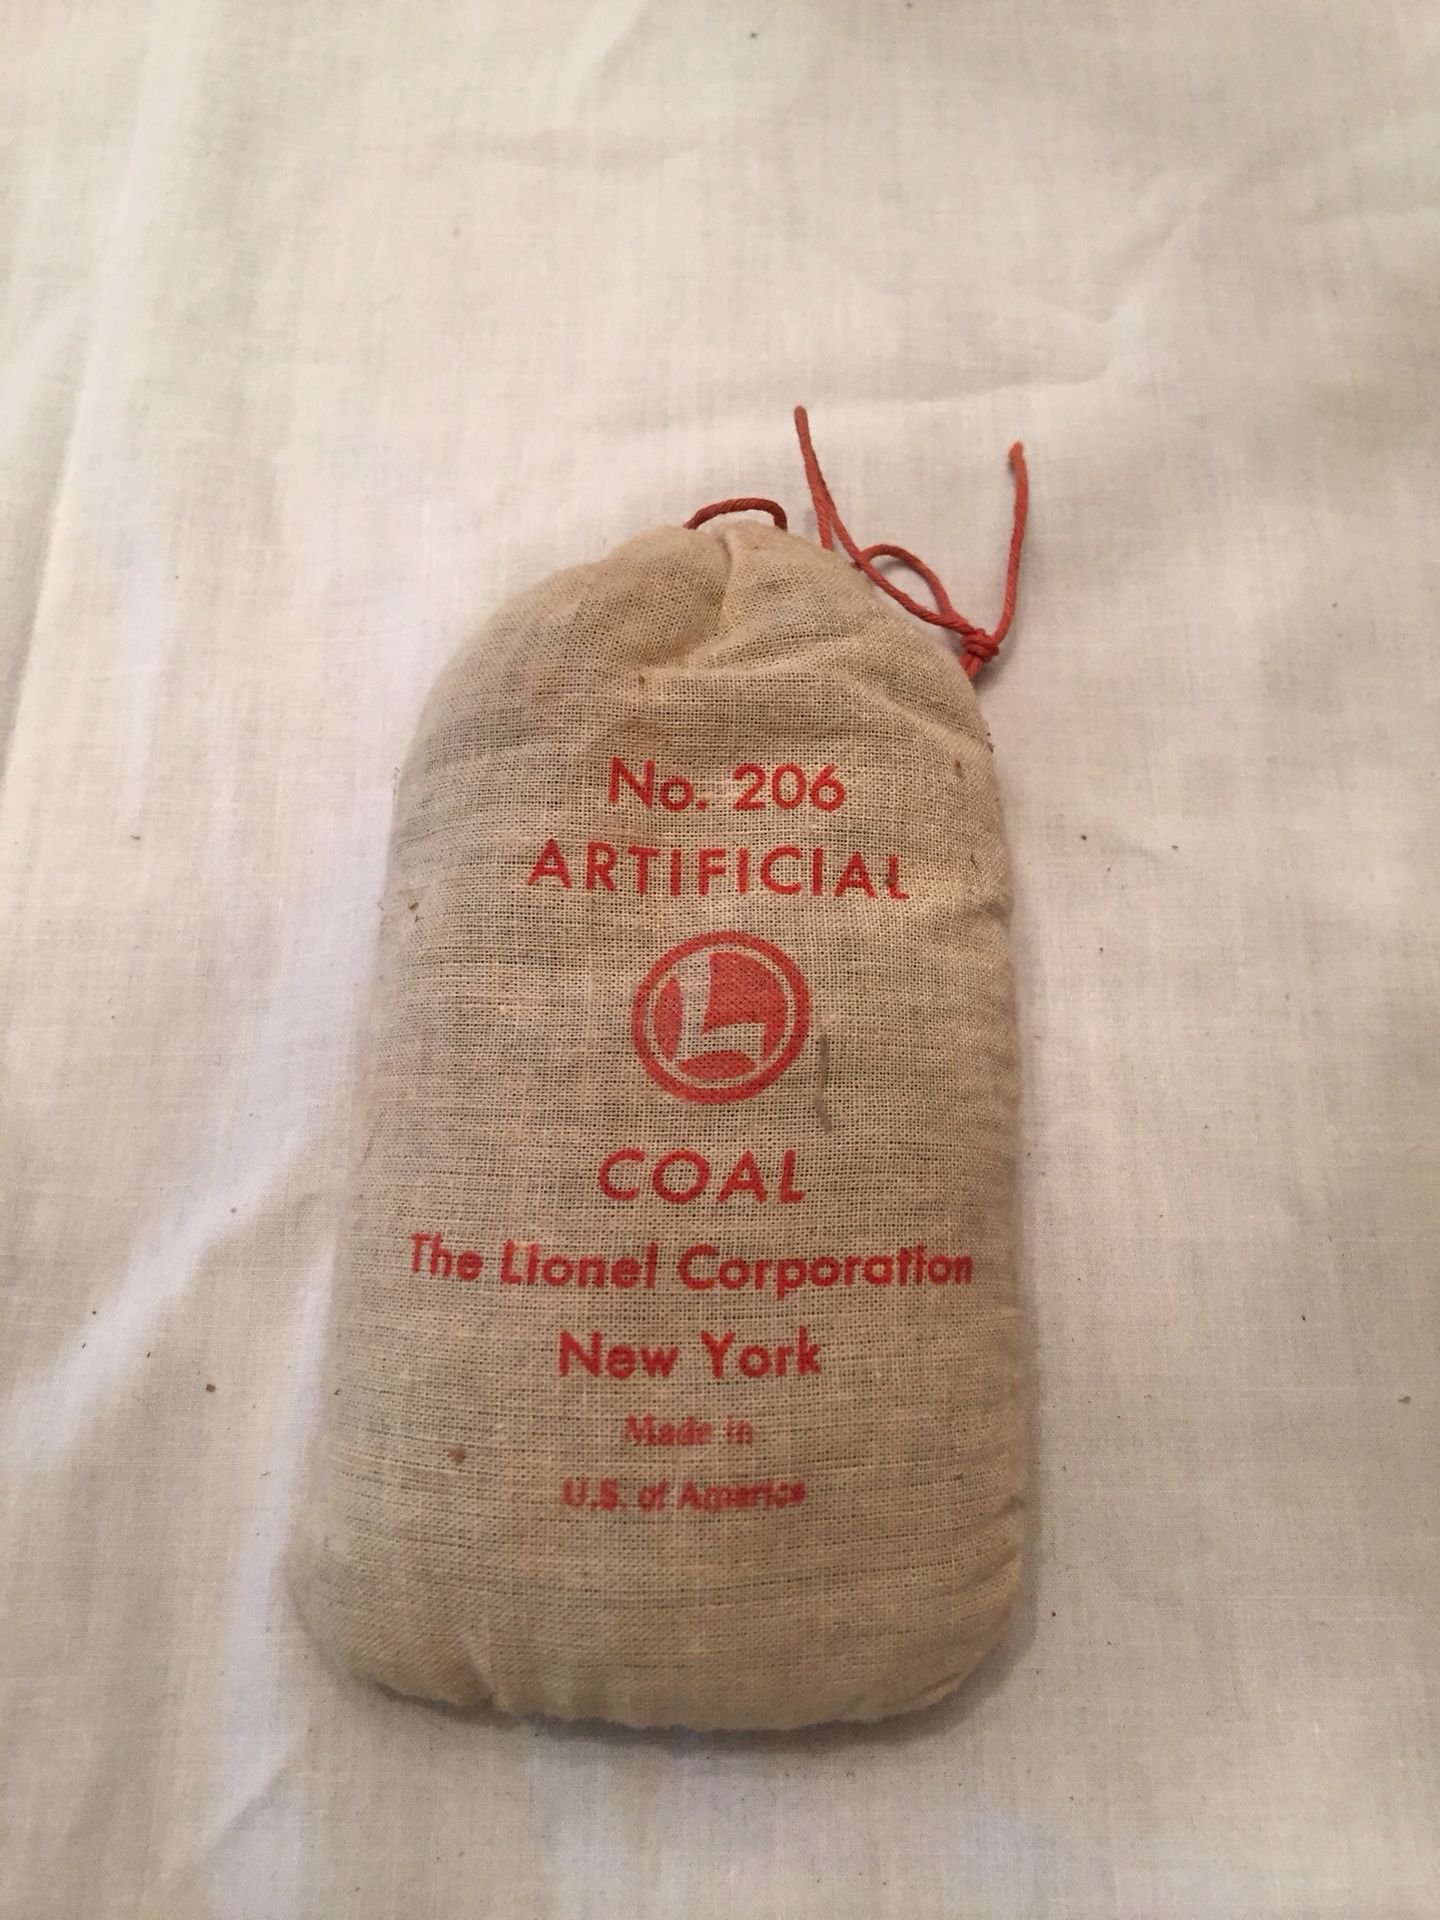 1950s Lionel Artificial Coal